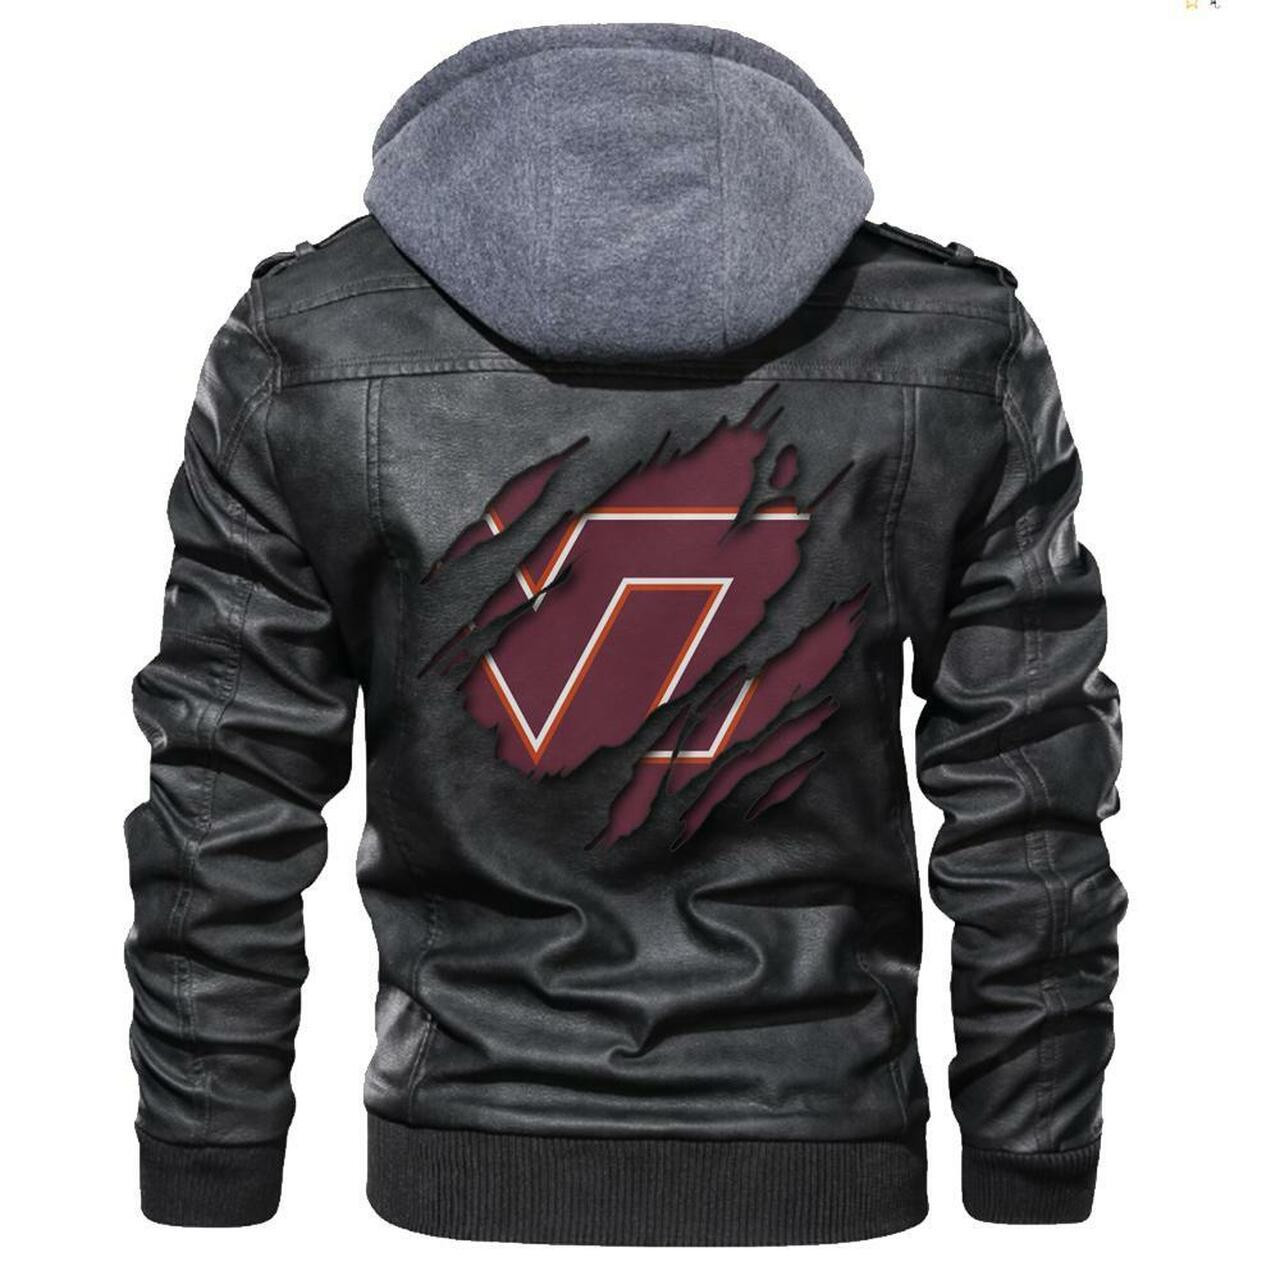 Top leather jacket Sells Best on Techcomshop 5